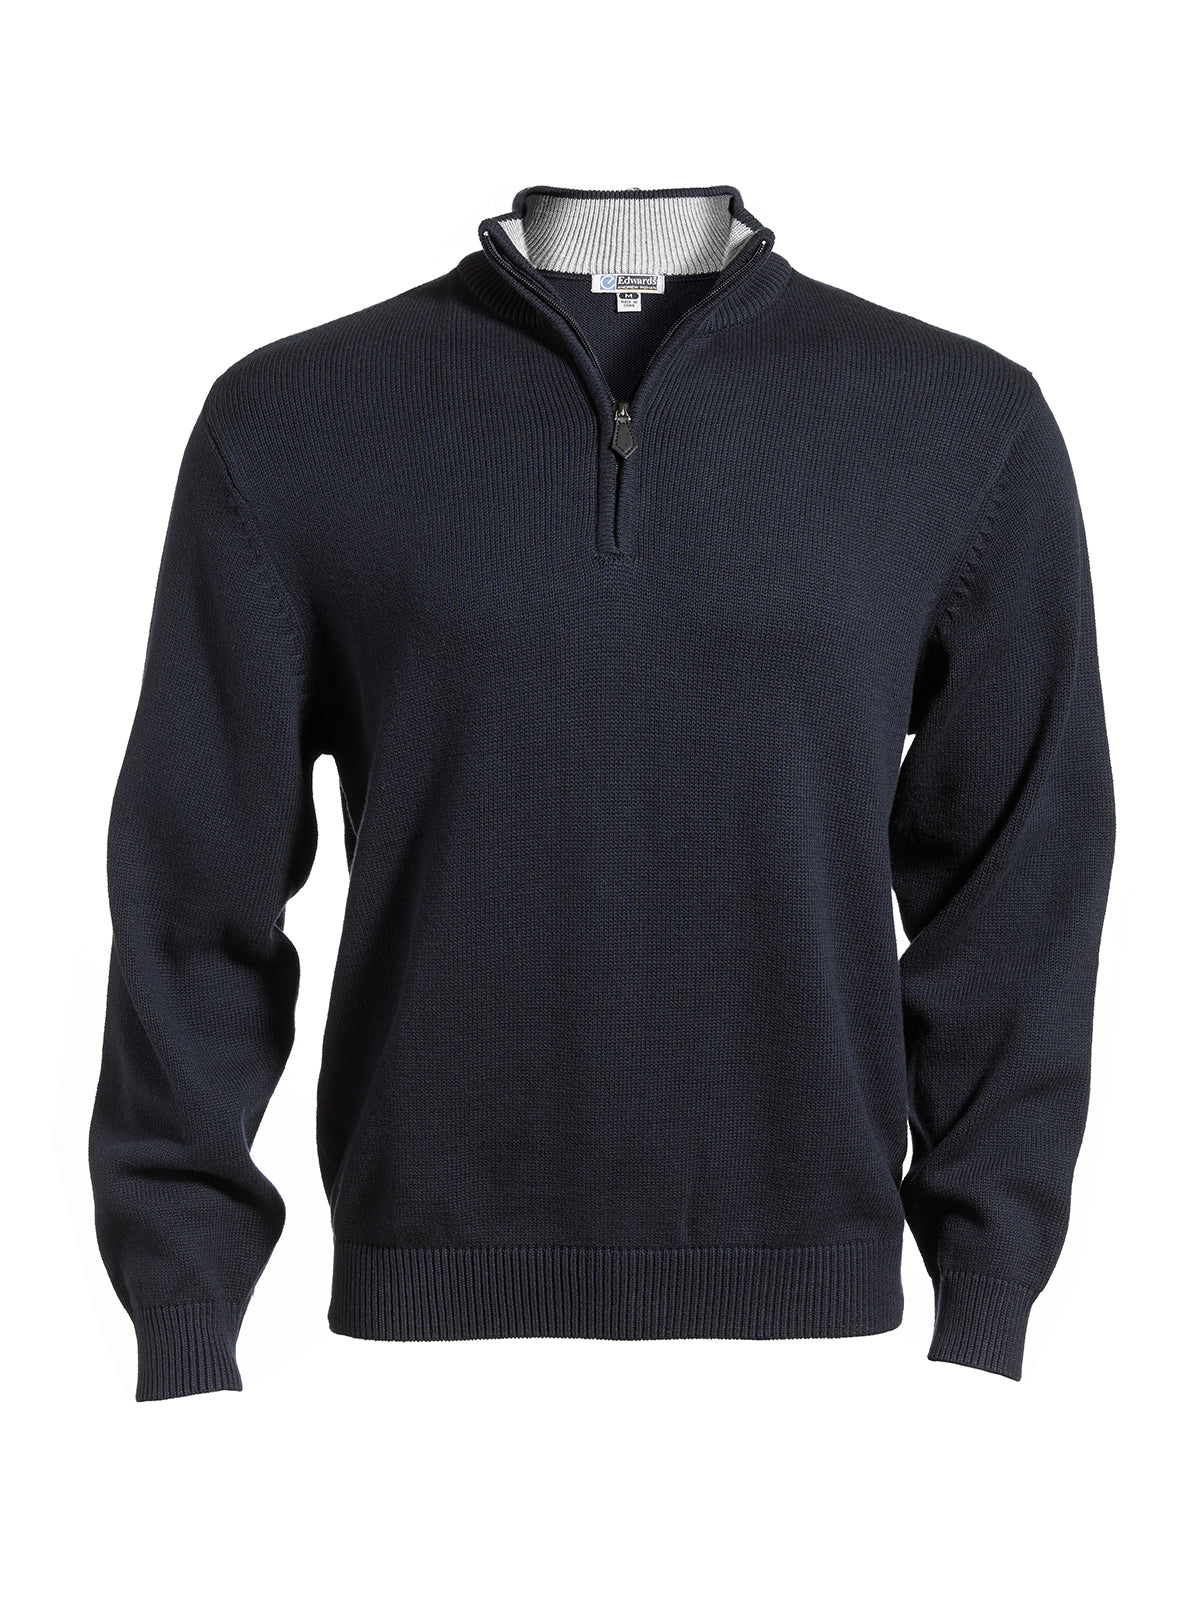 Unisex Jersey Knit Sweater - 712 - Navy